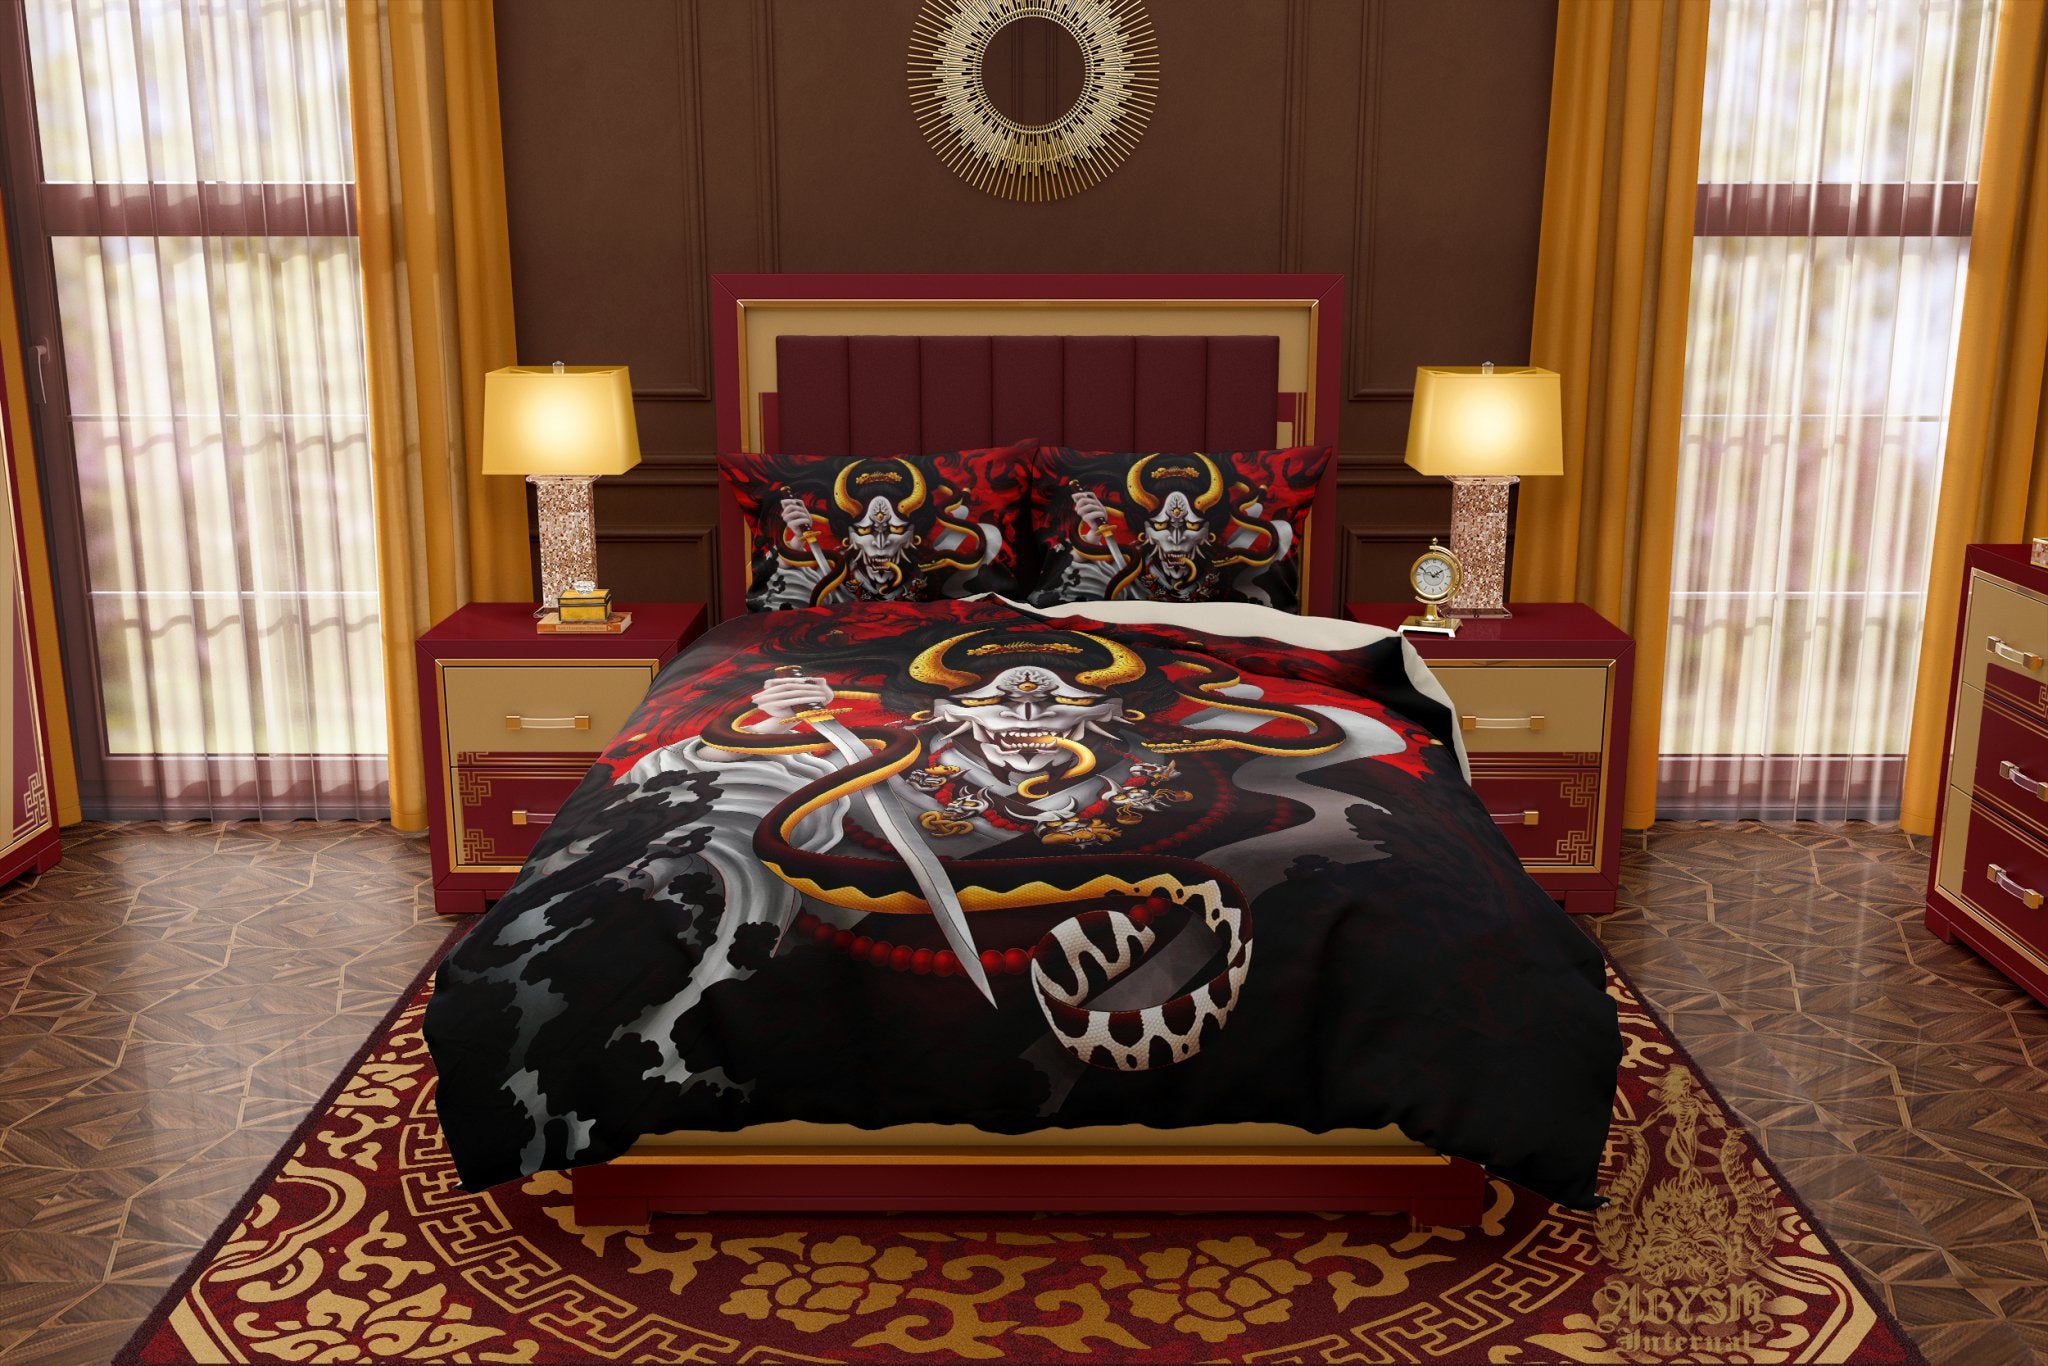 Hannya Bedding Set, Comforter or Duvet, Japanese Demon Bed Cover, Anime Youkai Bedroom Decor, King, Queen & Twin Size - Snake, Original Colors - Abysm Internal